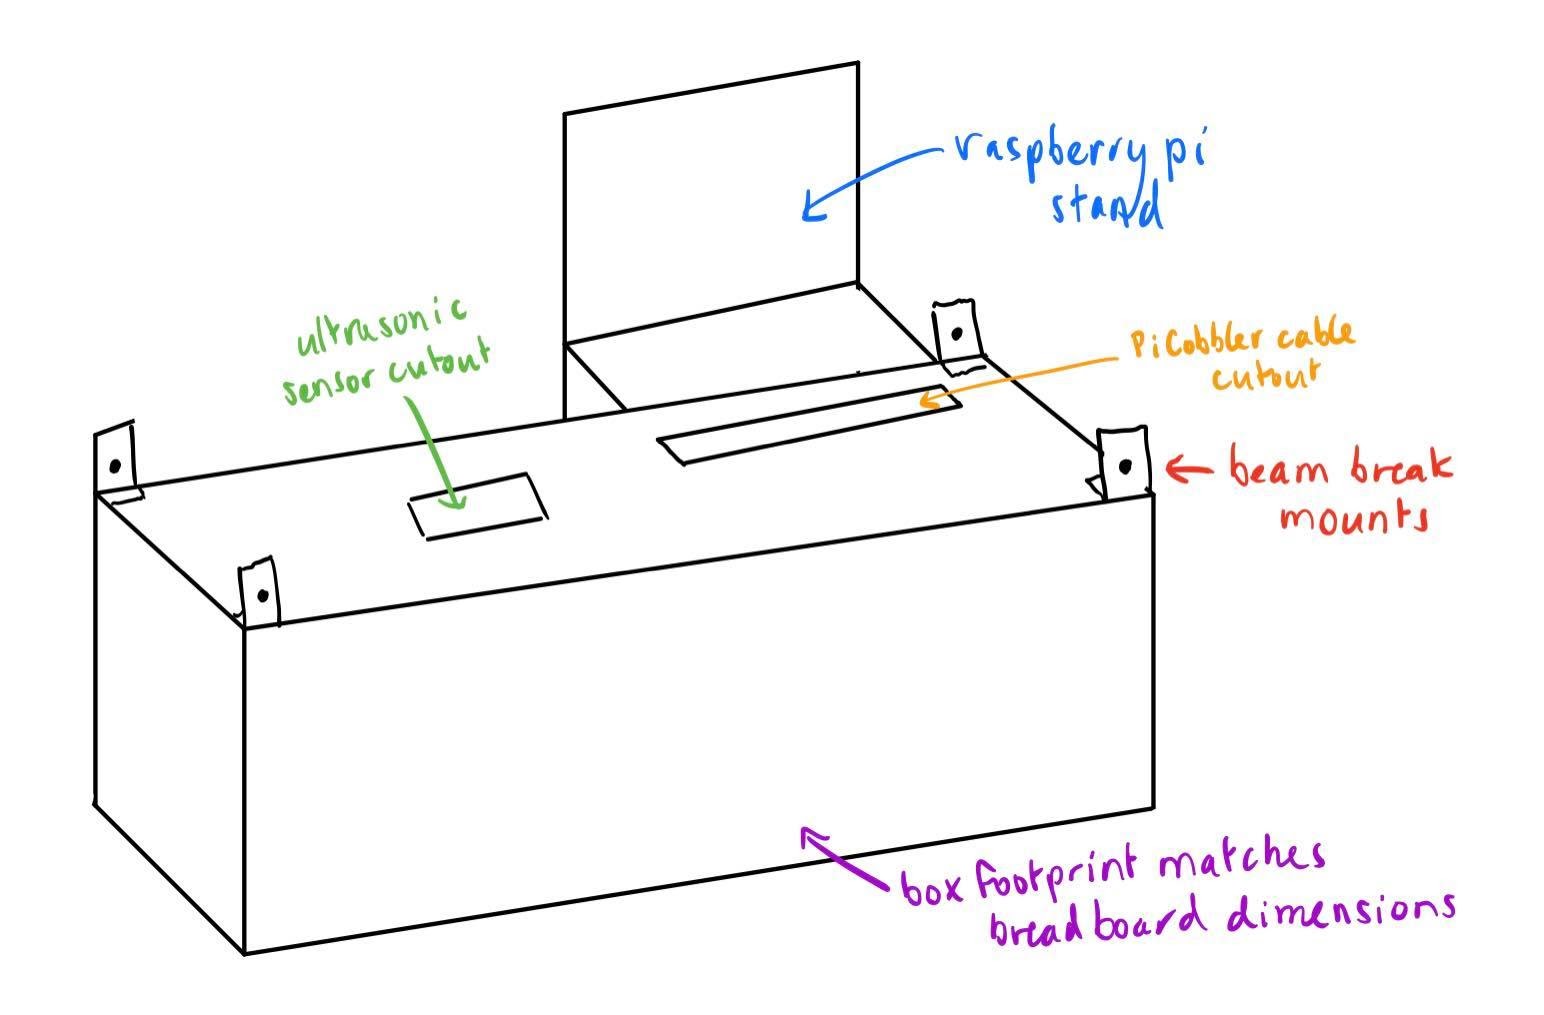 Figure 14: Initial sketch of mounting enclosure design